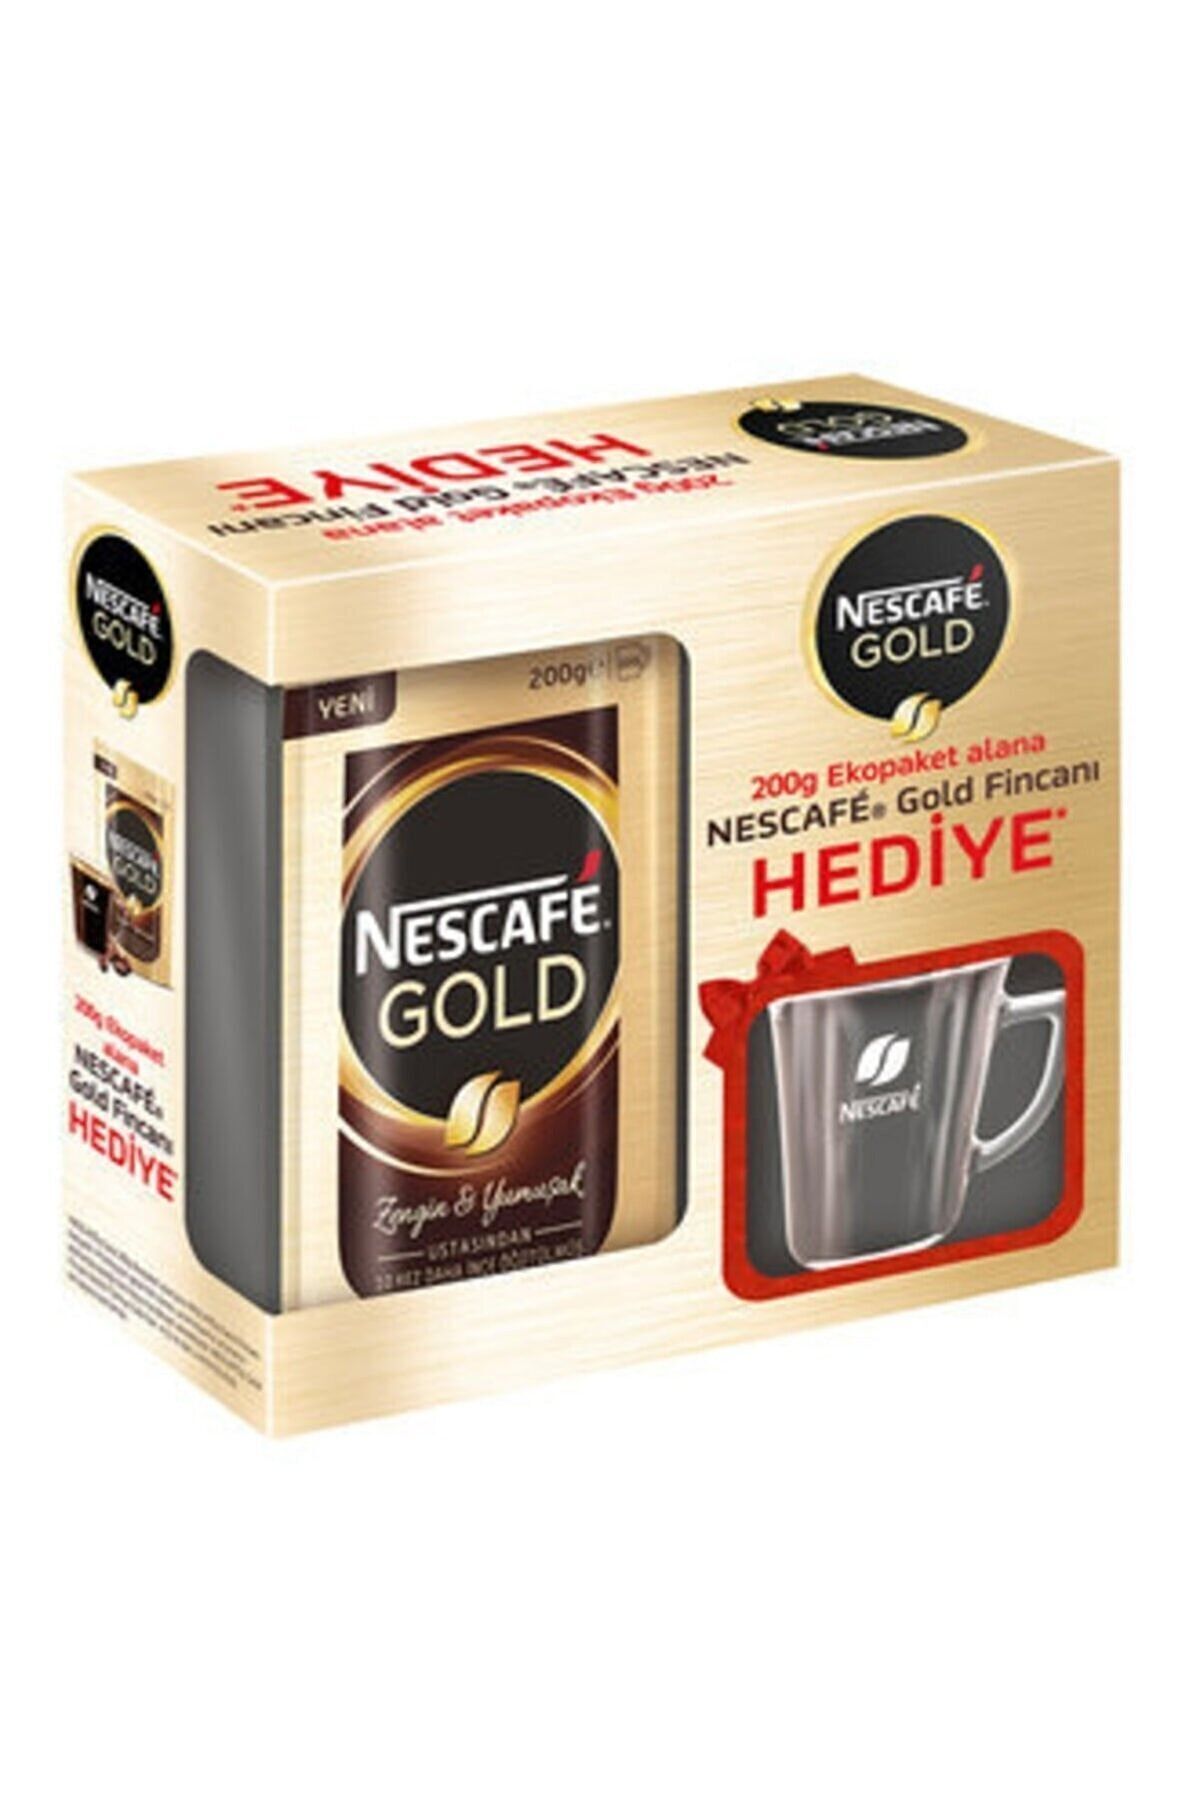 Nescafe Gold Eko Paket 150 g ve Kupa Bardak Hediye